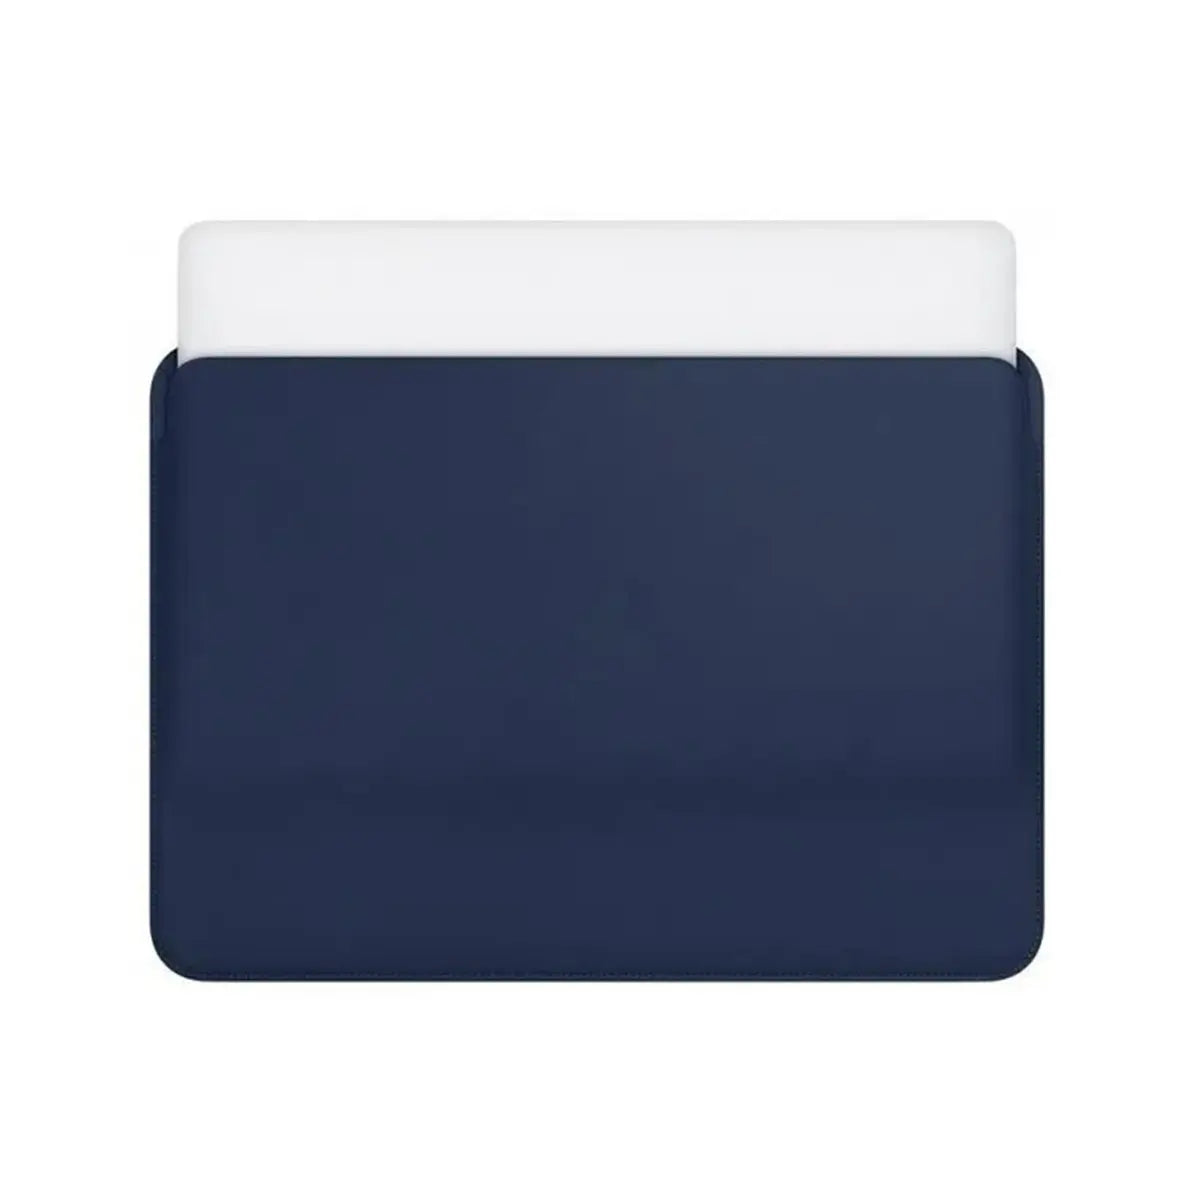 COTECi PU Leather MacBook Sleeve for MacBook 16-inch